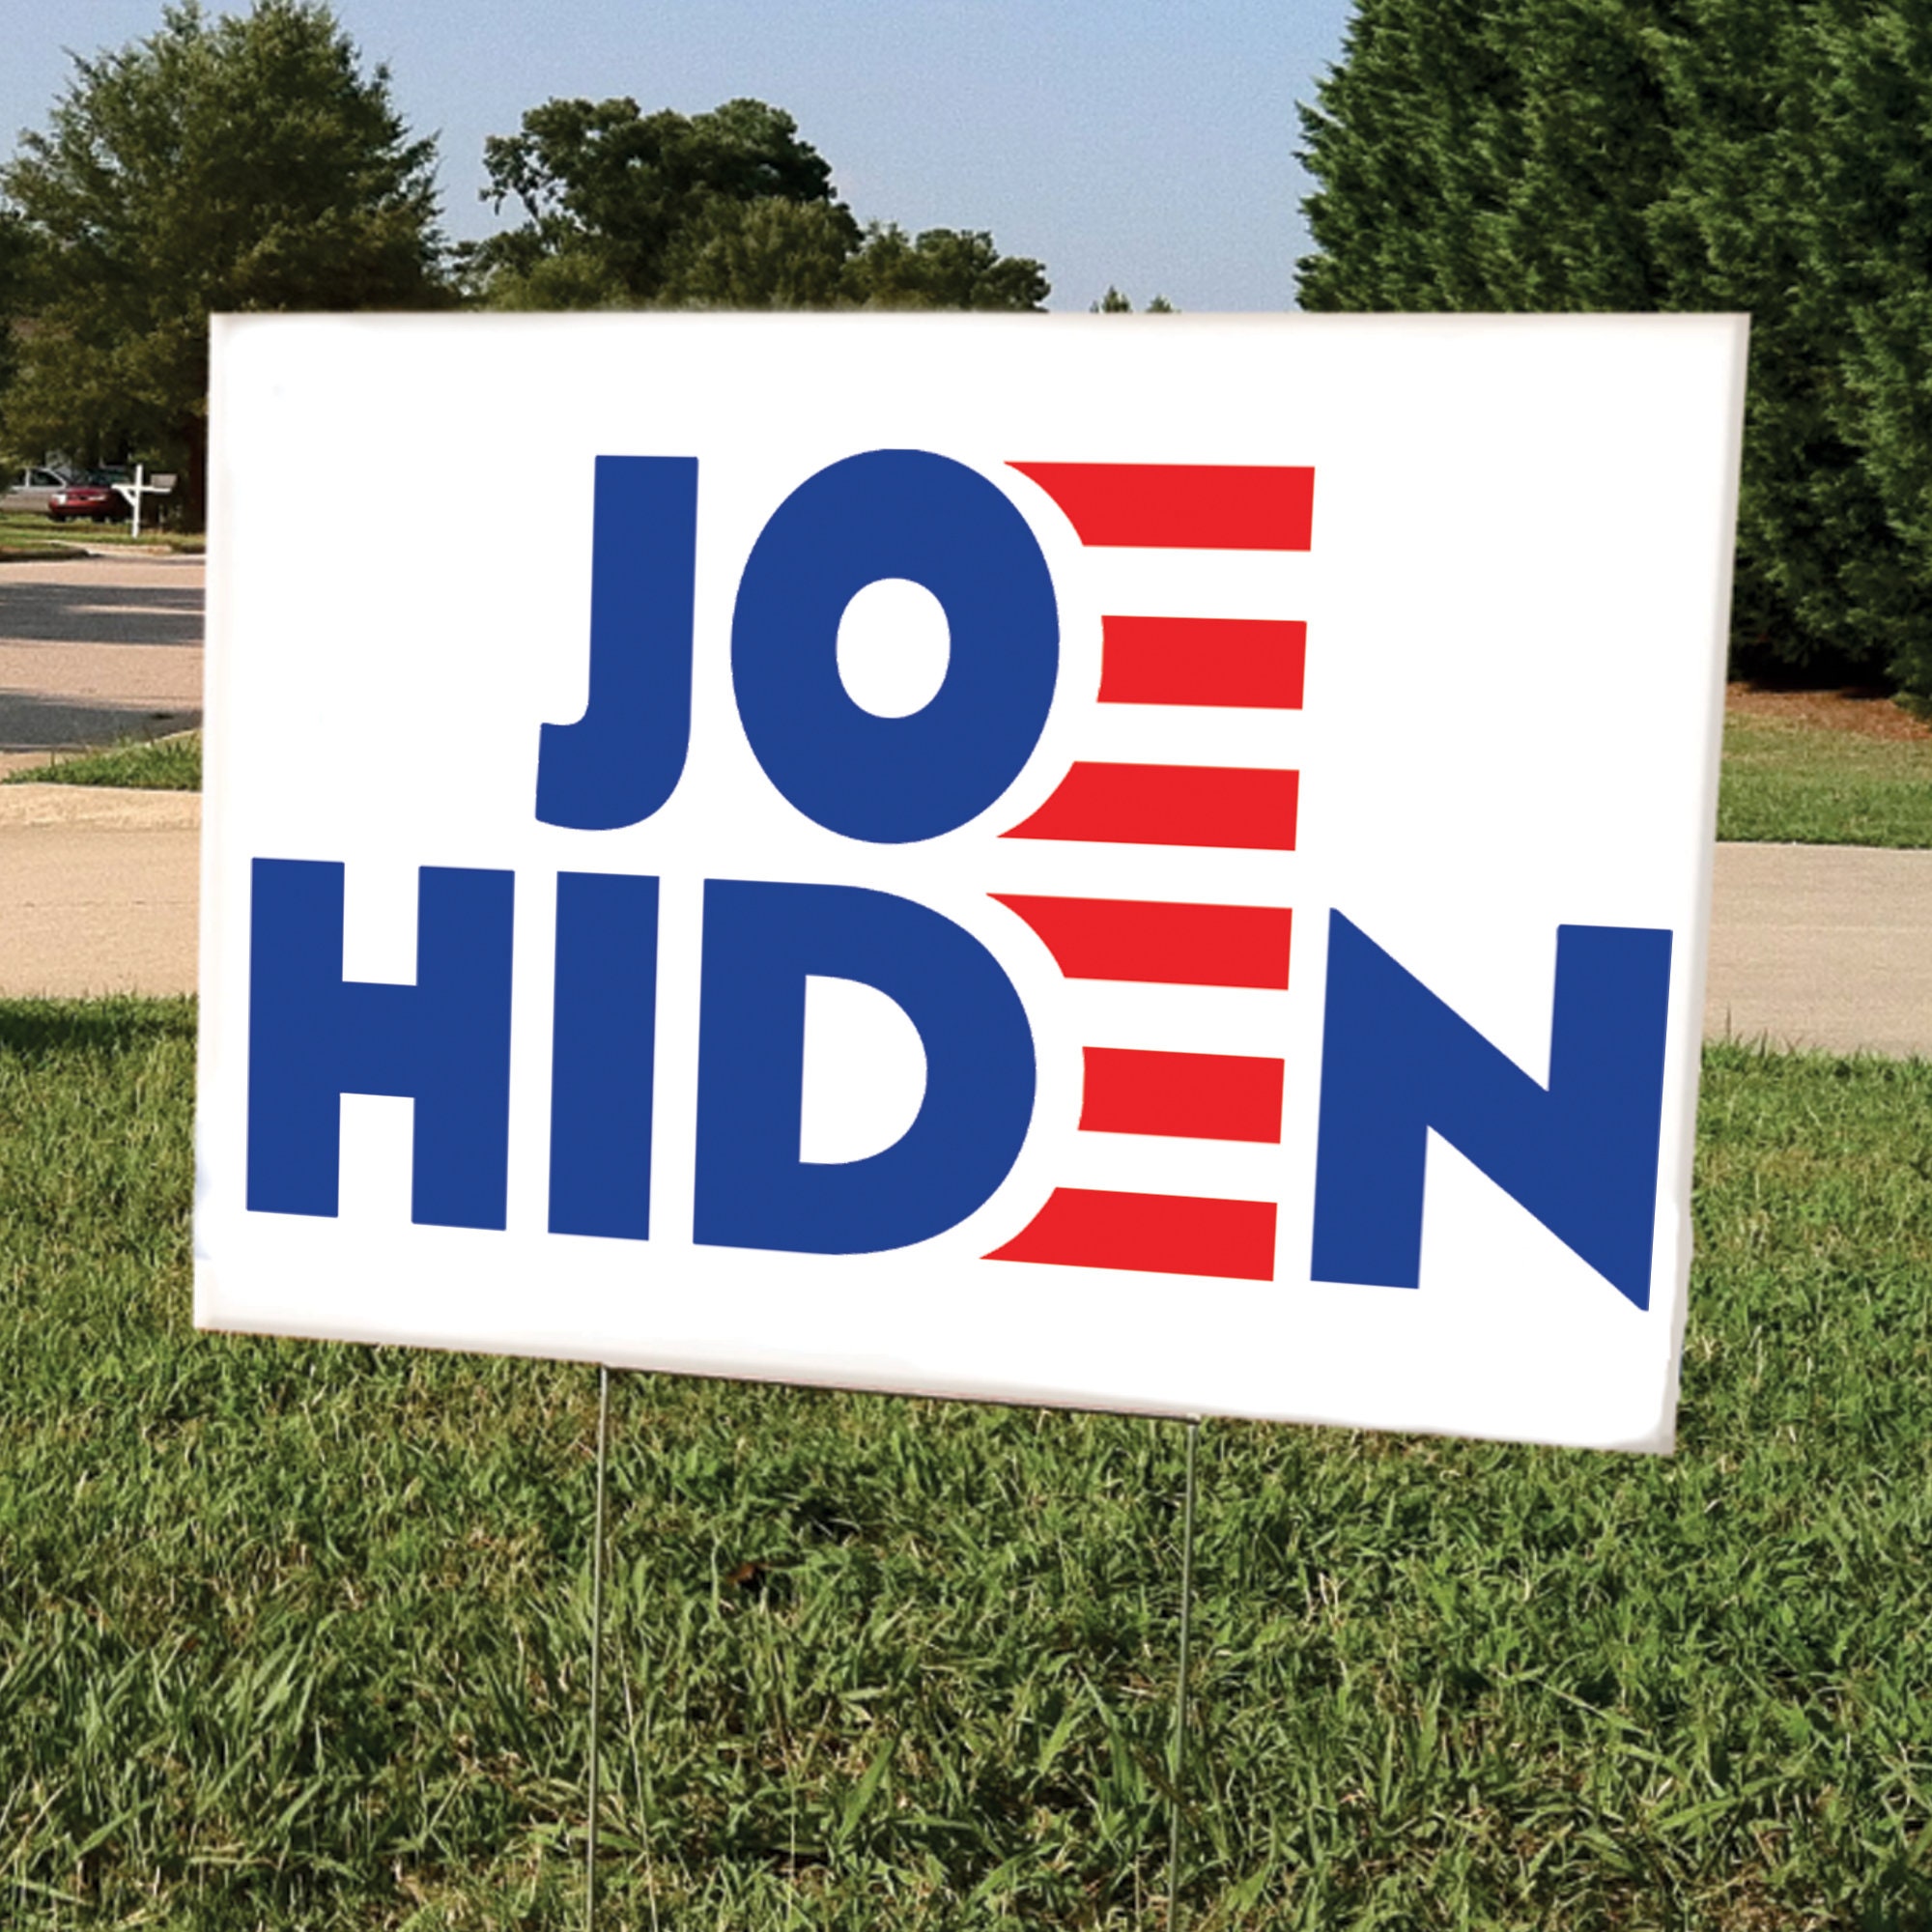 Joe Mama funny and humor political election yard lawn sign 18x24